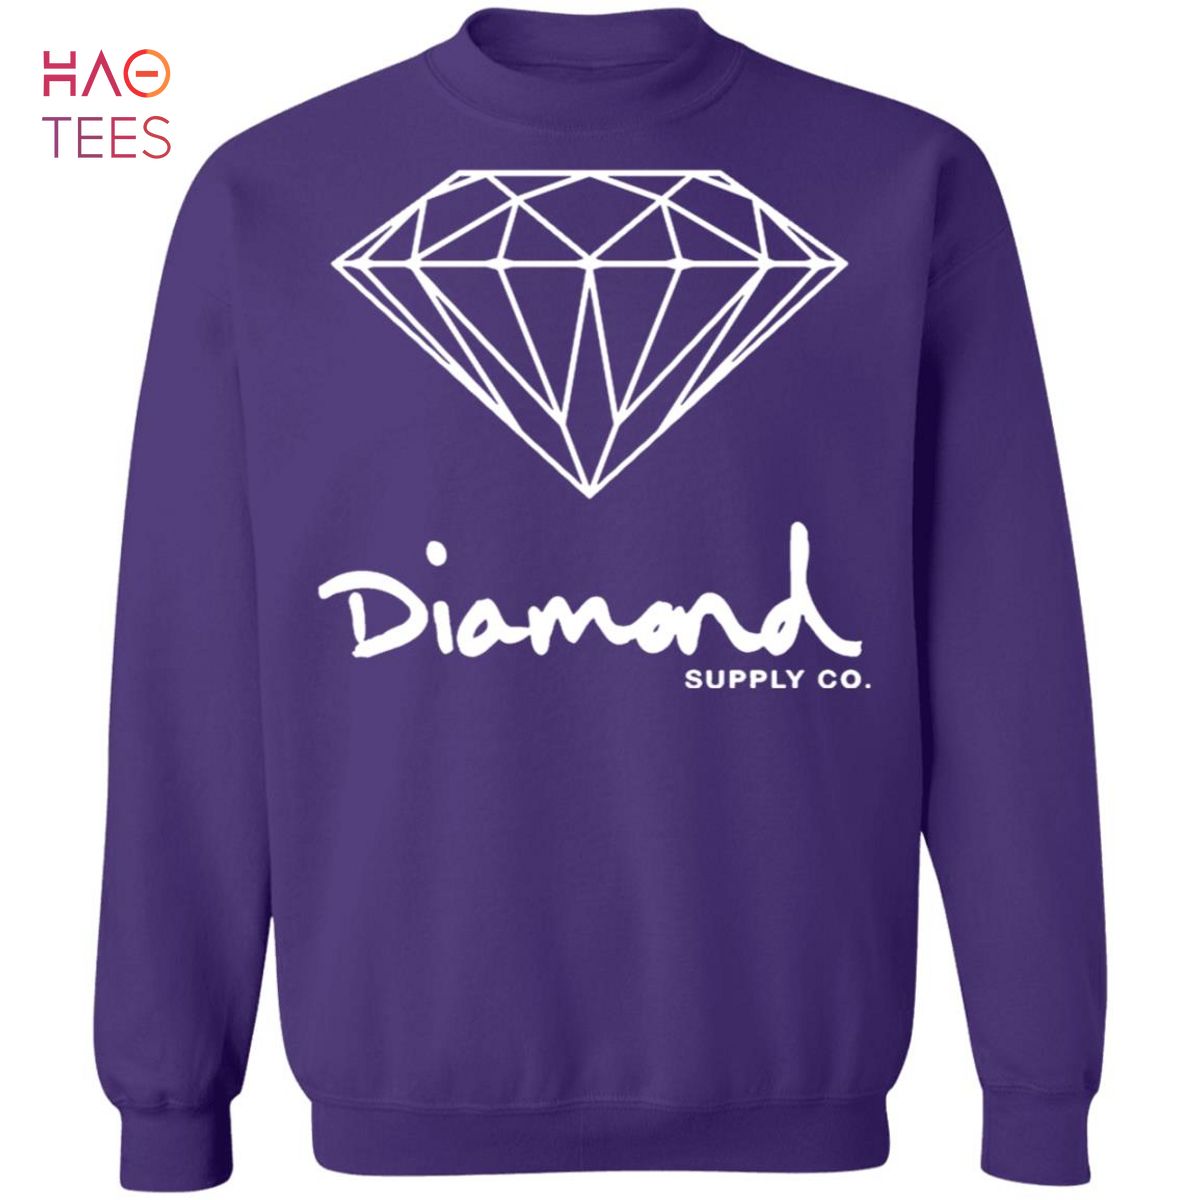 HOT Diamond Supply Co Sweater